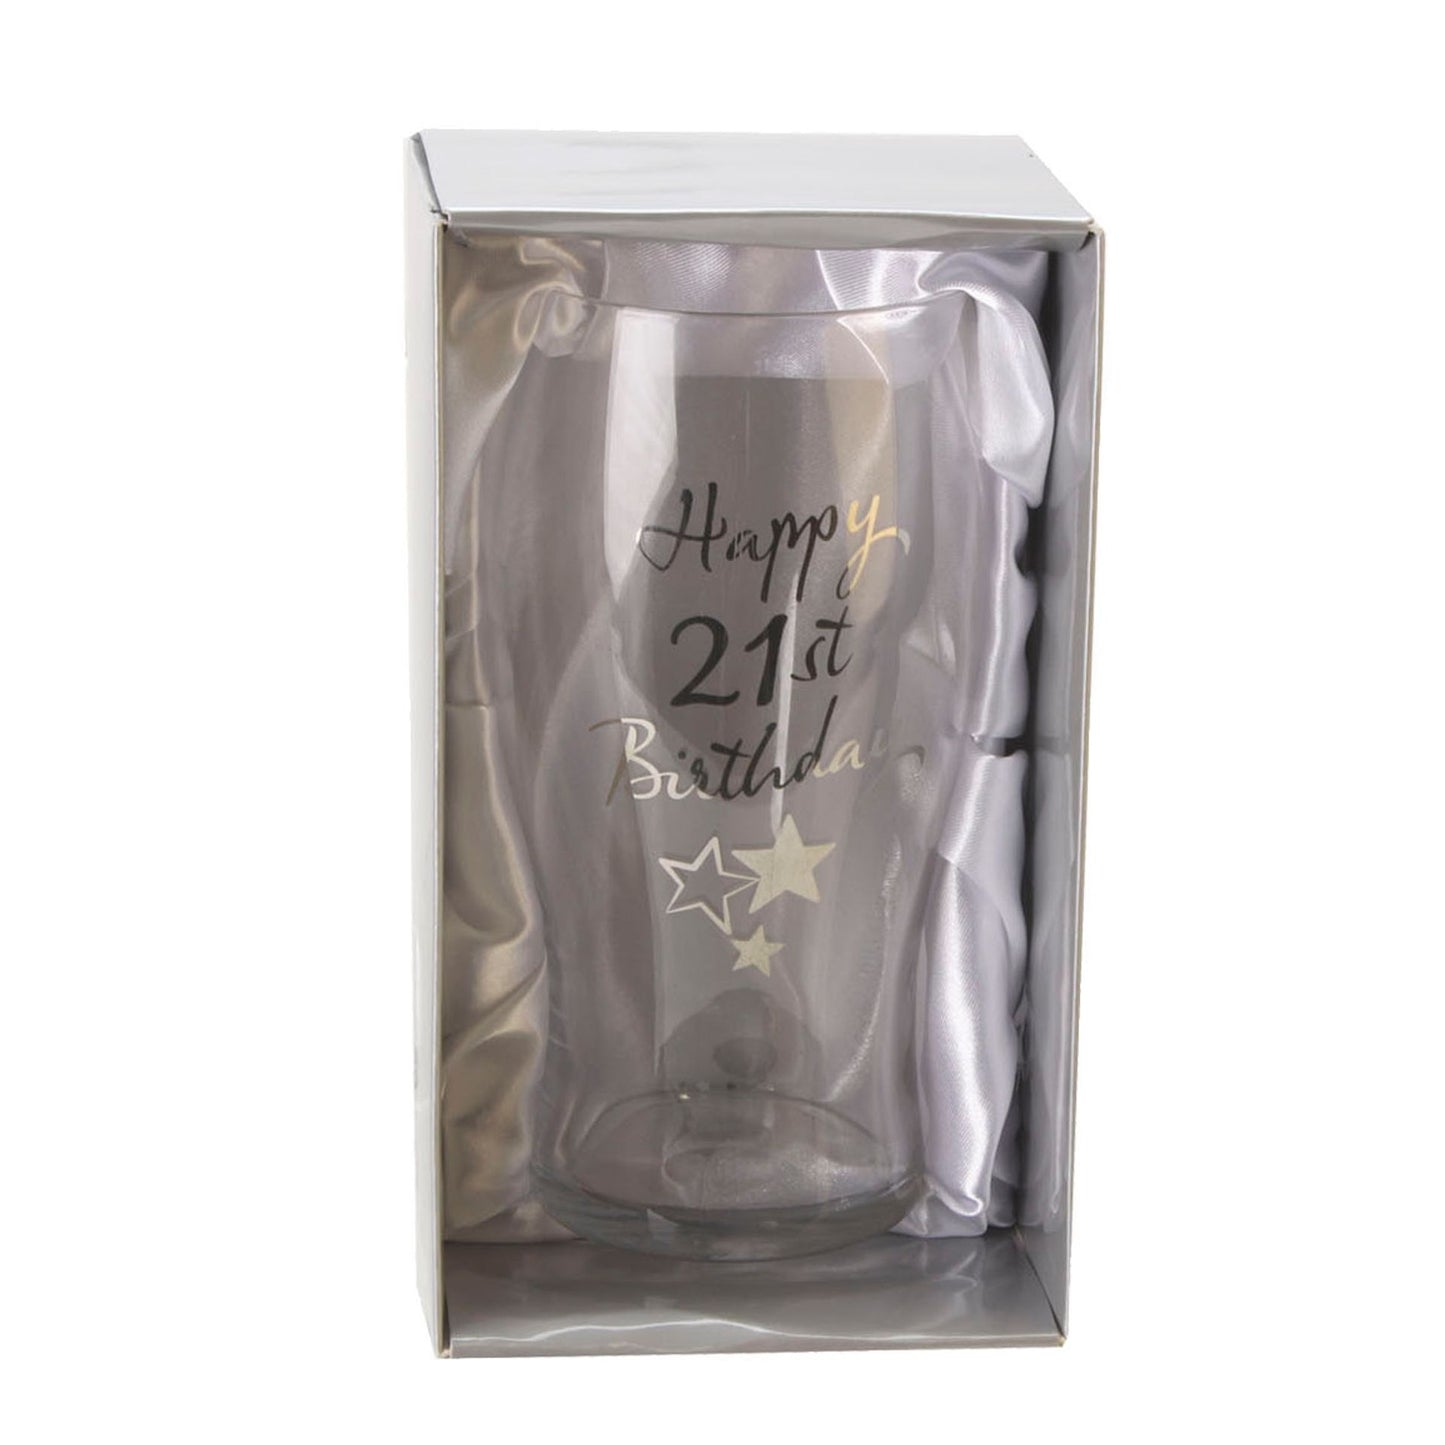 Juliana Happy 21st Birthday Gift - Pint Glass in Gift Box